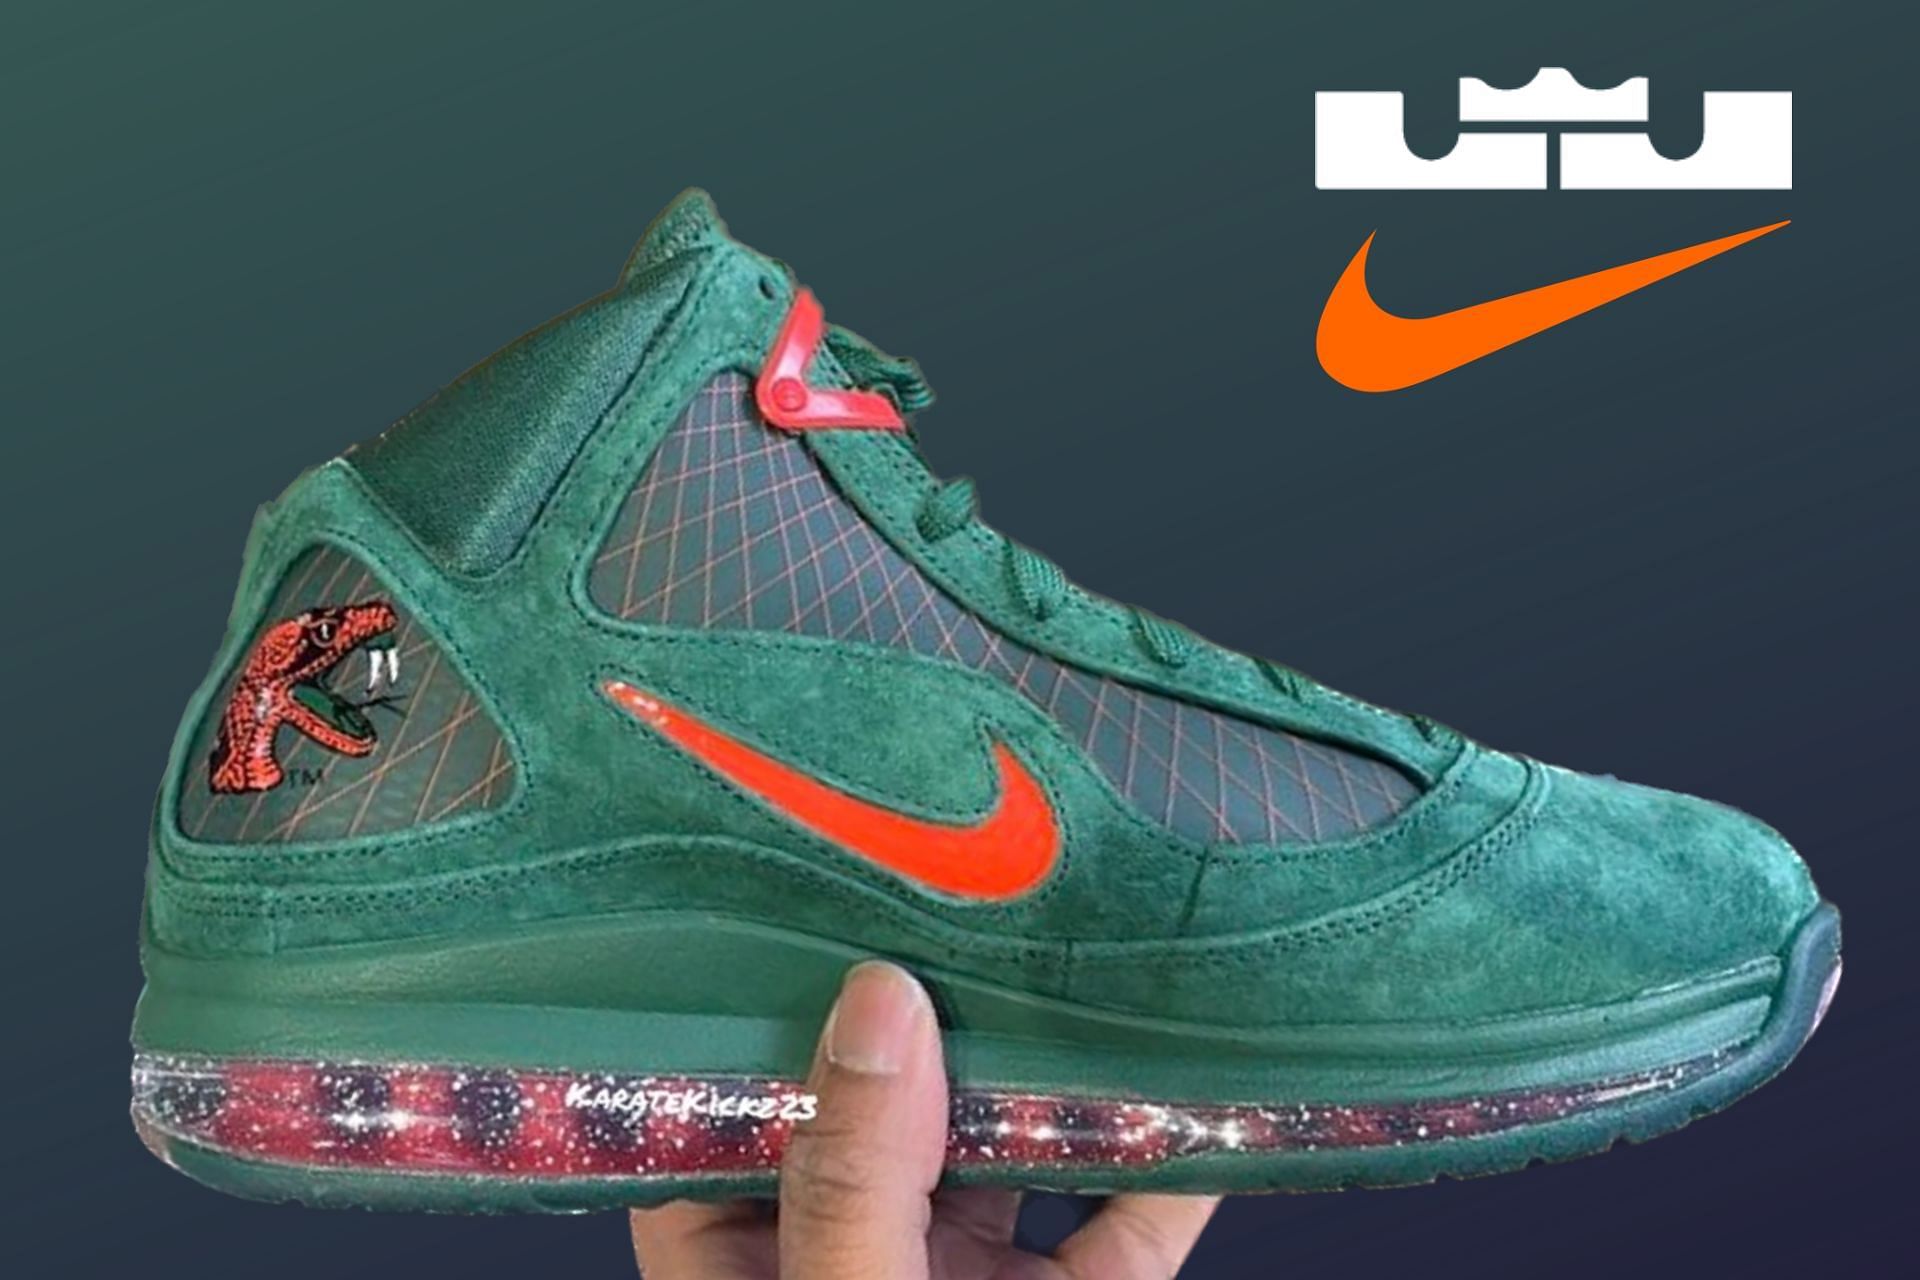 FAMU x Nike LeBron 7 Green shoes (Image via Sportskeeda)